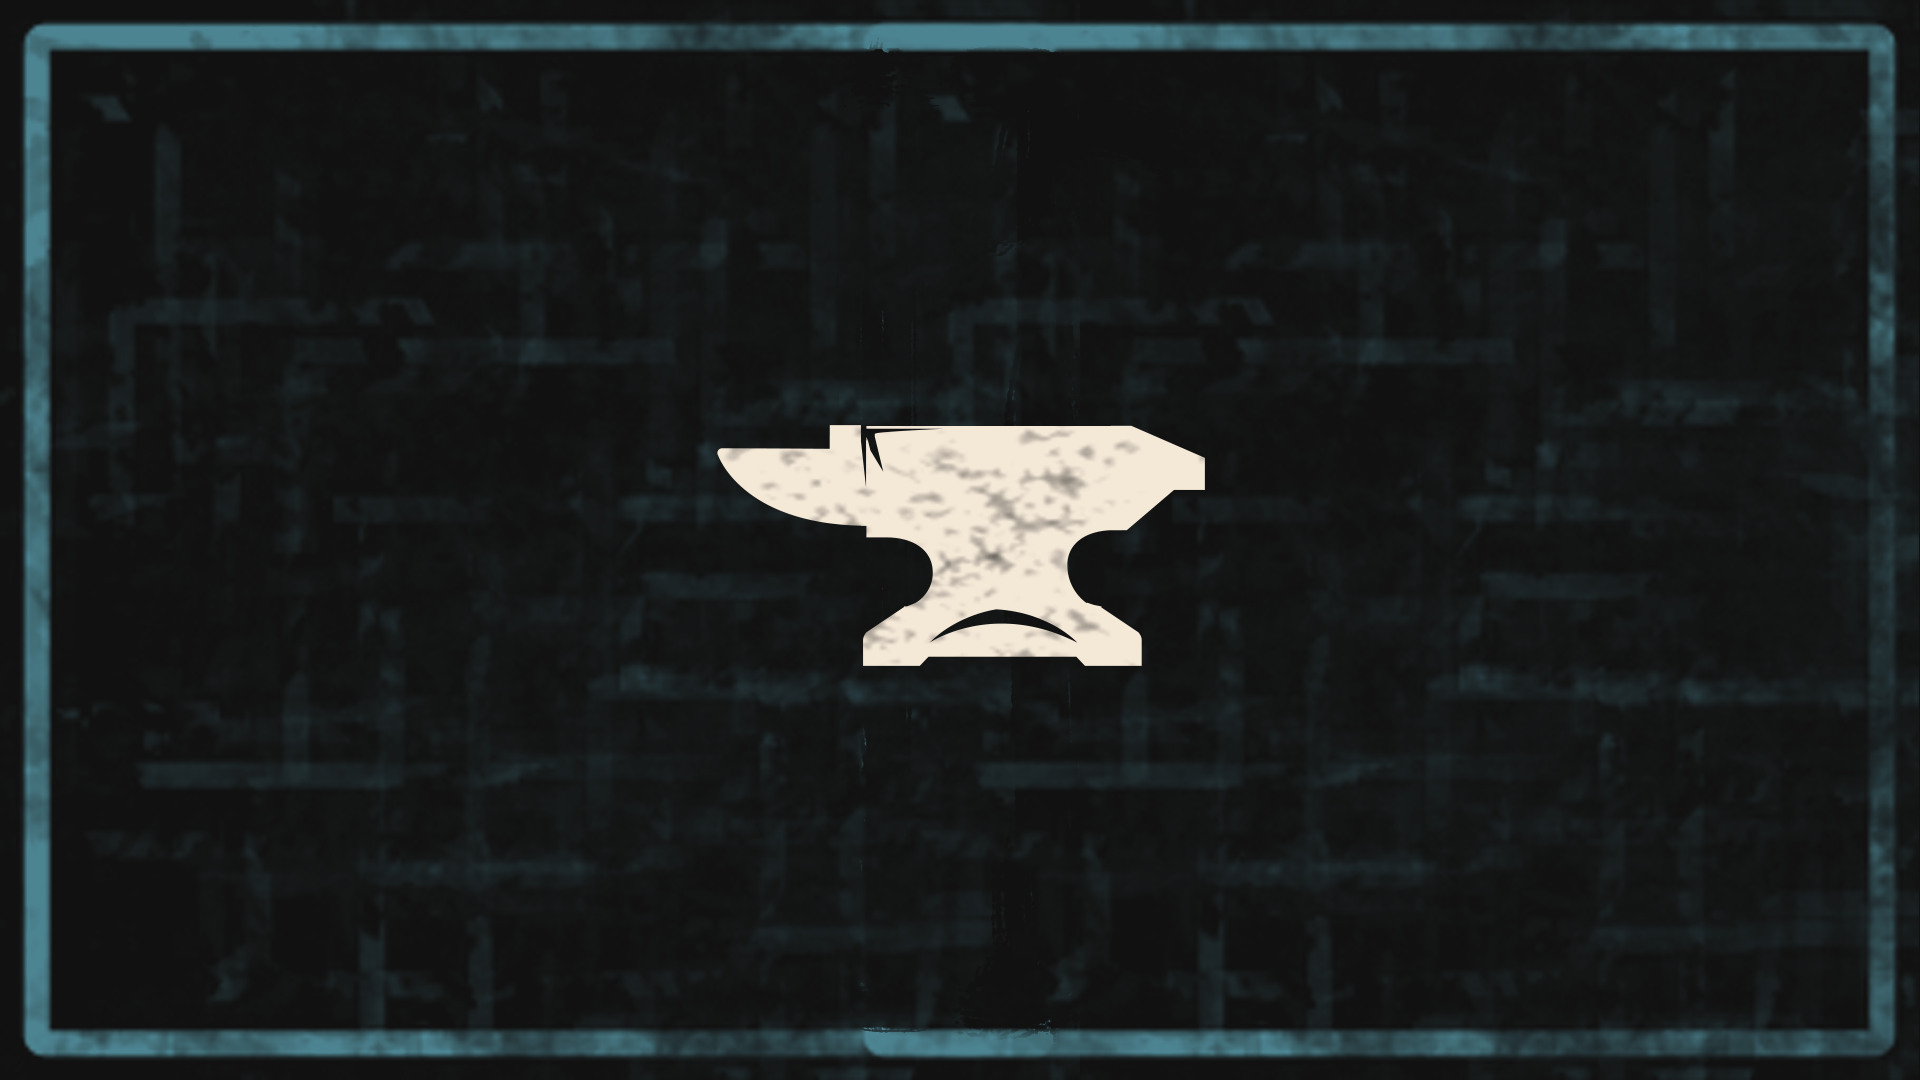 Icon for Gunsmith